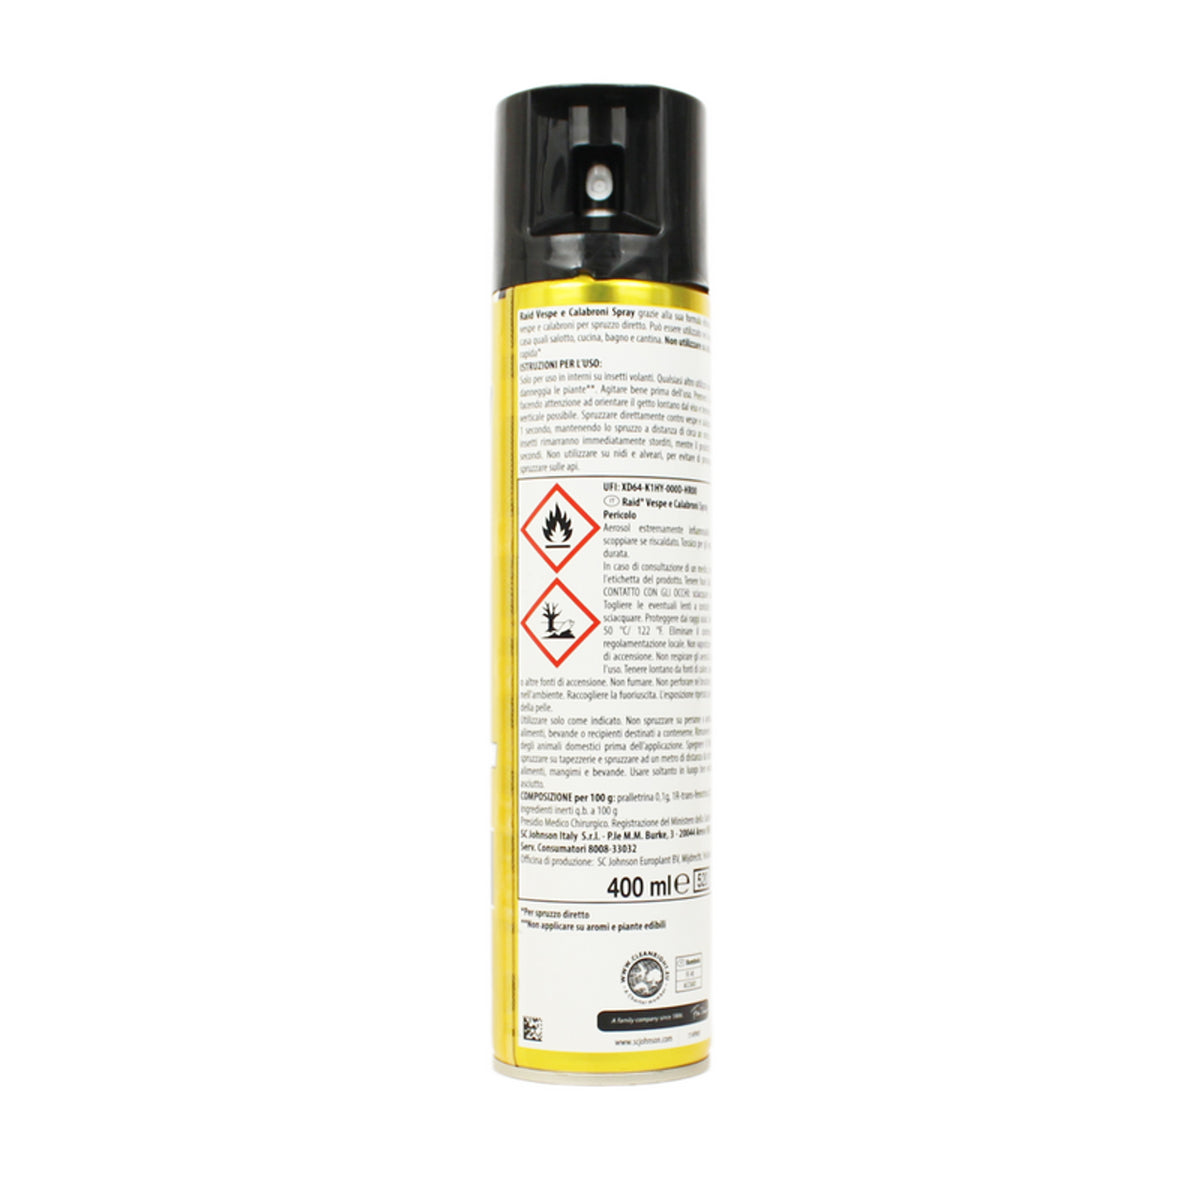 Insecticide raid vesp et calabroni spray 400 ml